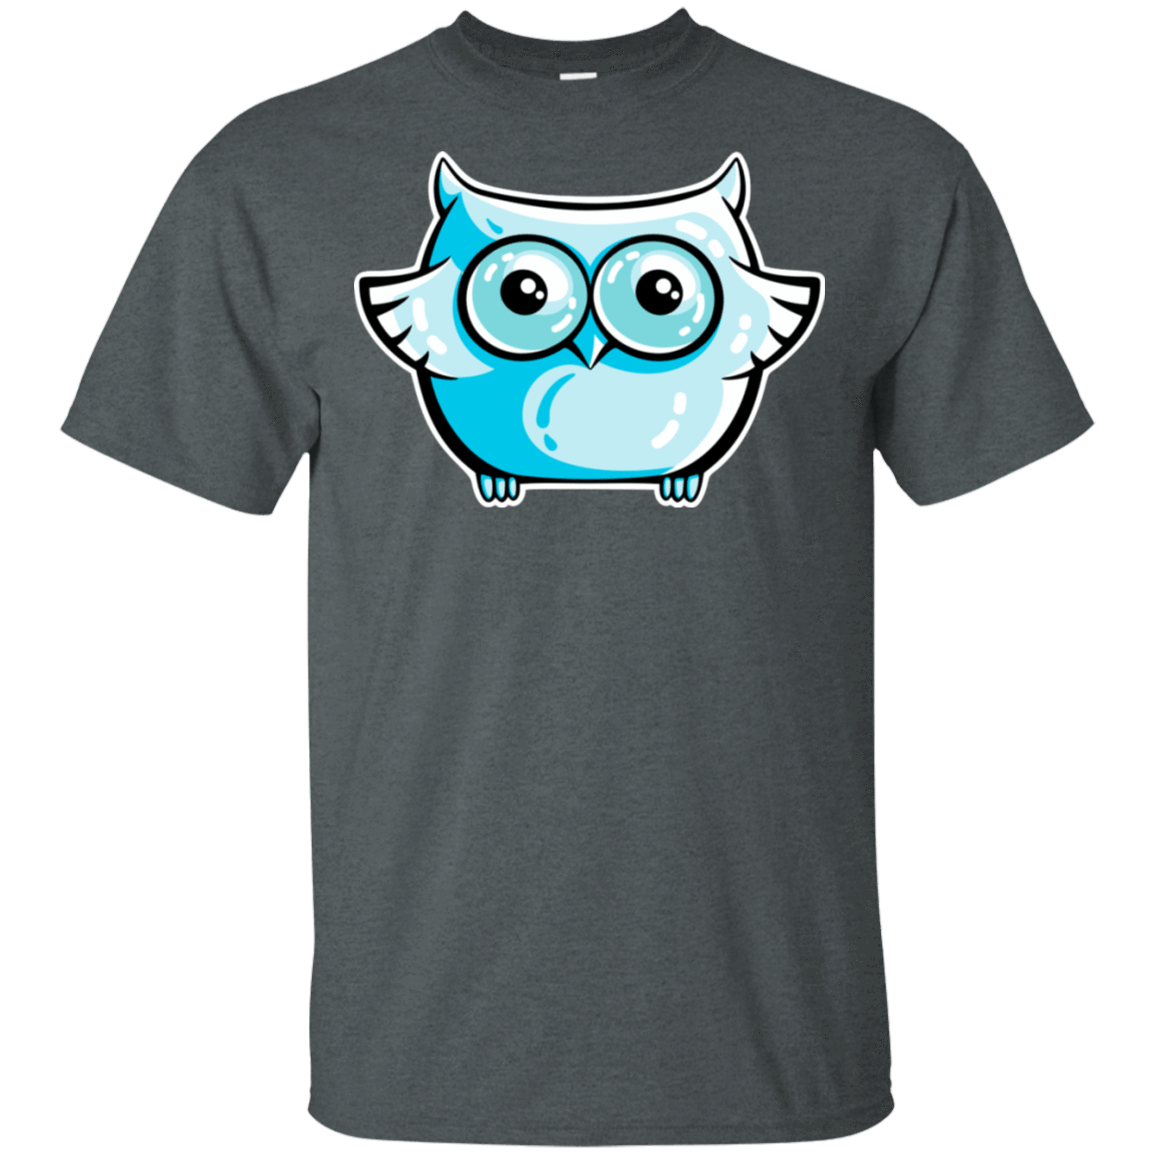 T-Shirts Dark Heather / S Kawaii Owl T-Shirt